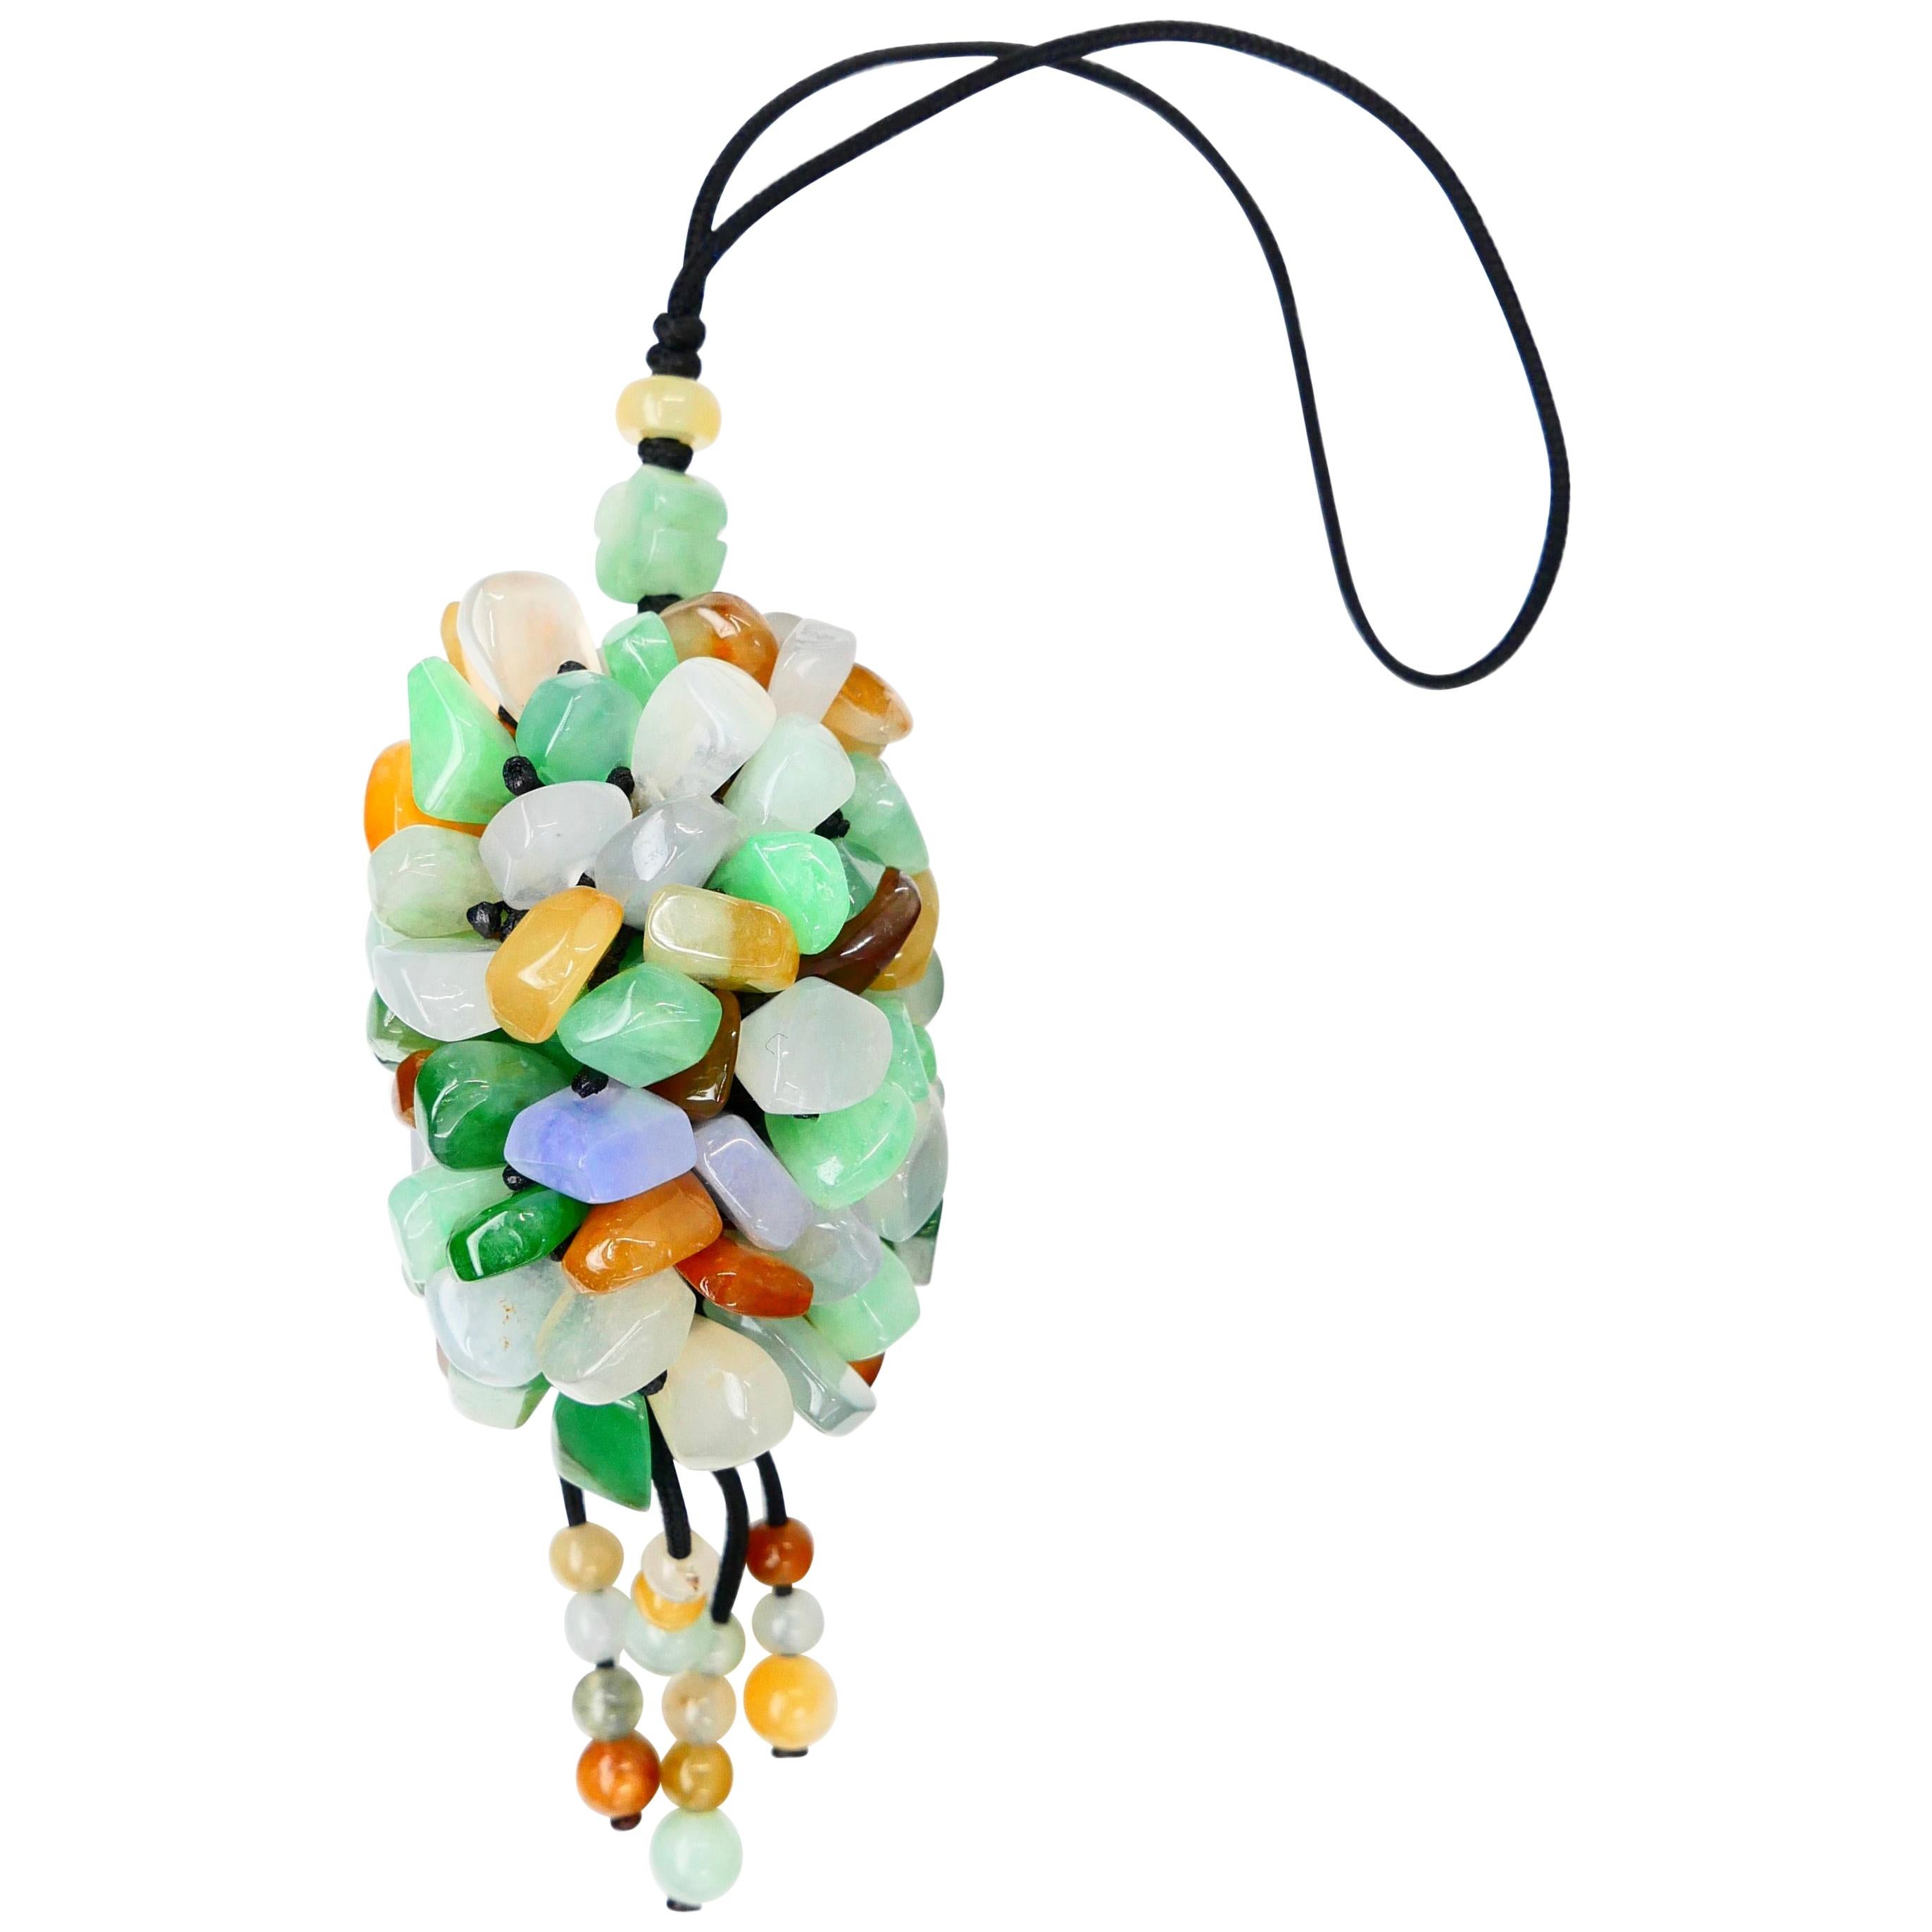 Certified Natural Jadeite Jade Drop Pendant Necklace, Handbag Charm, Apple Green